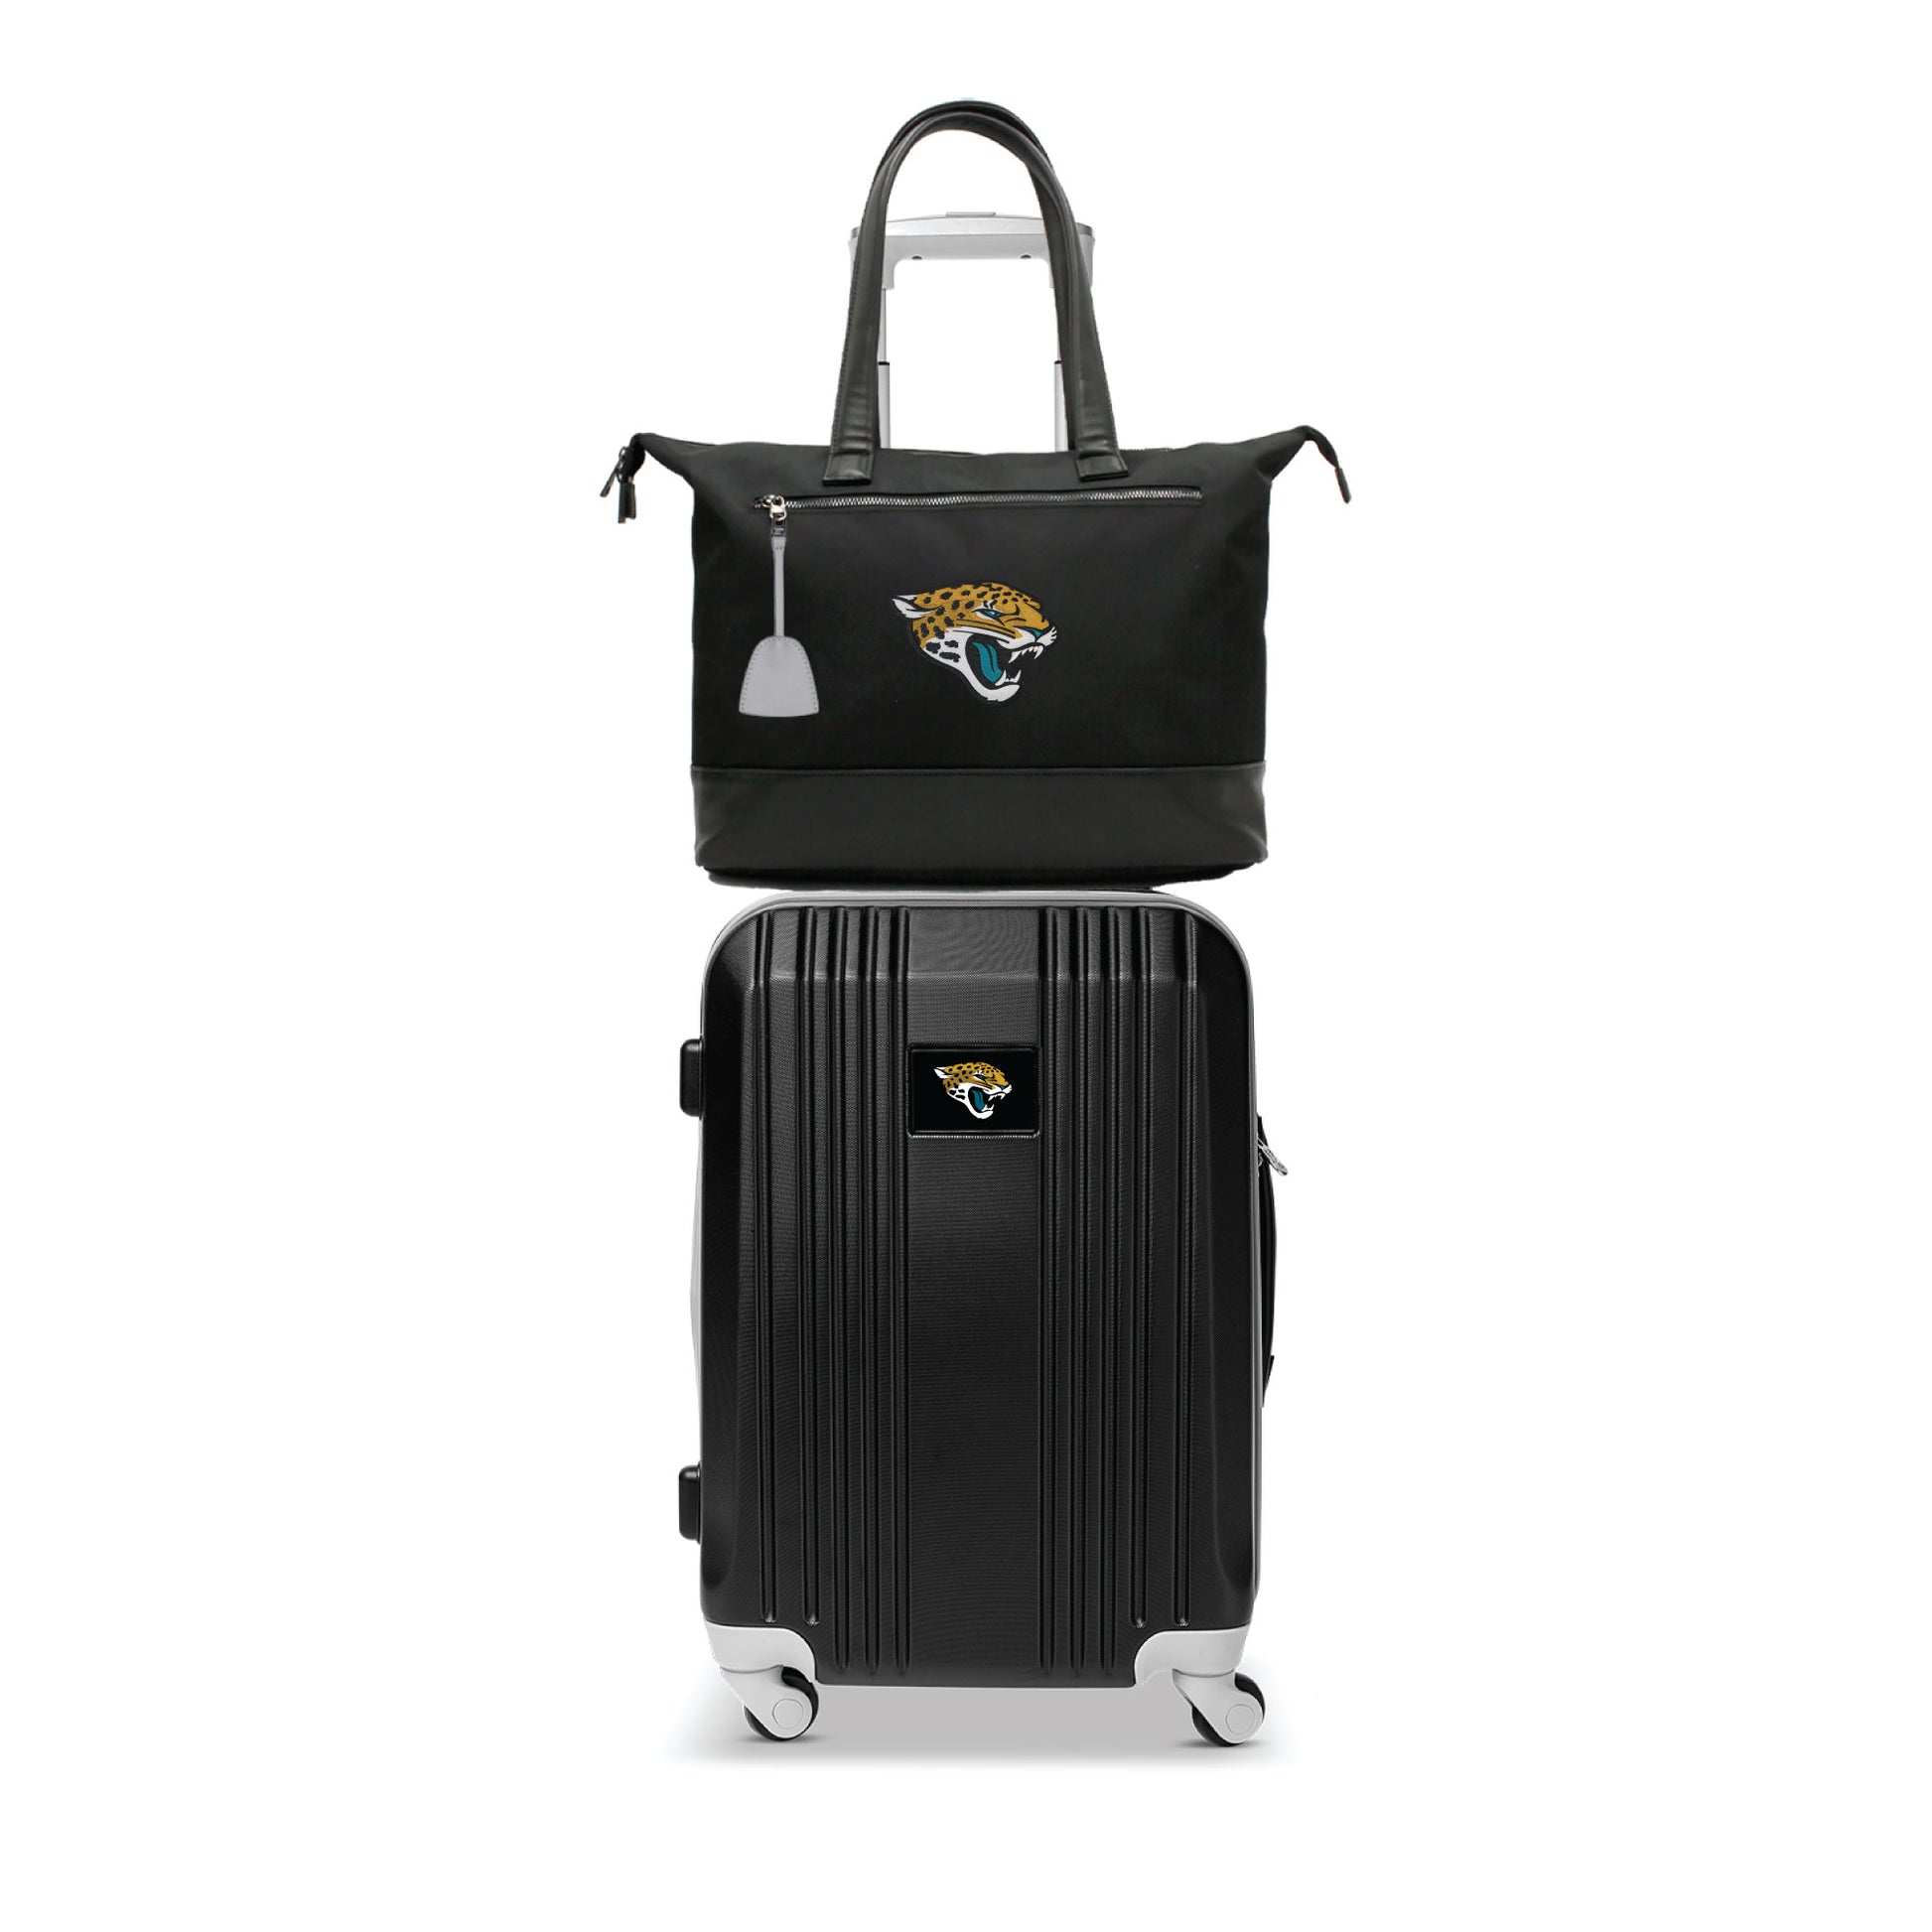 Jacksonville Jaguars Premium Laptop Tote Bag and Luggage Set